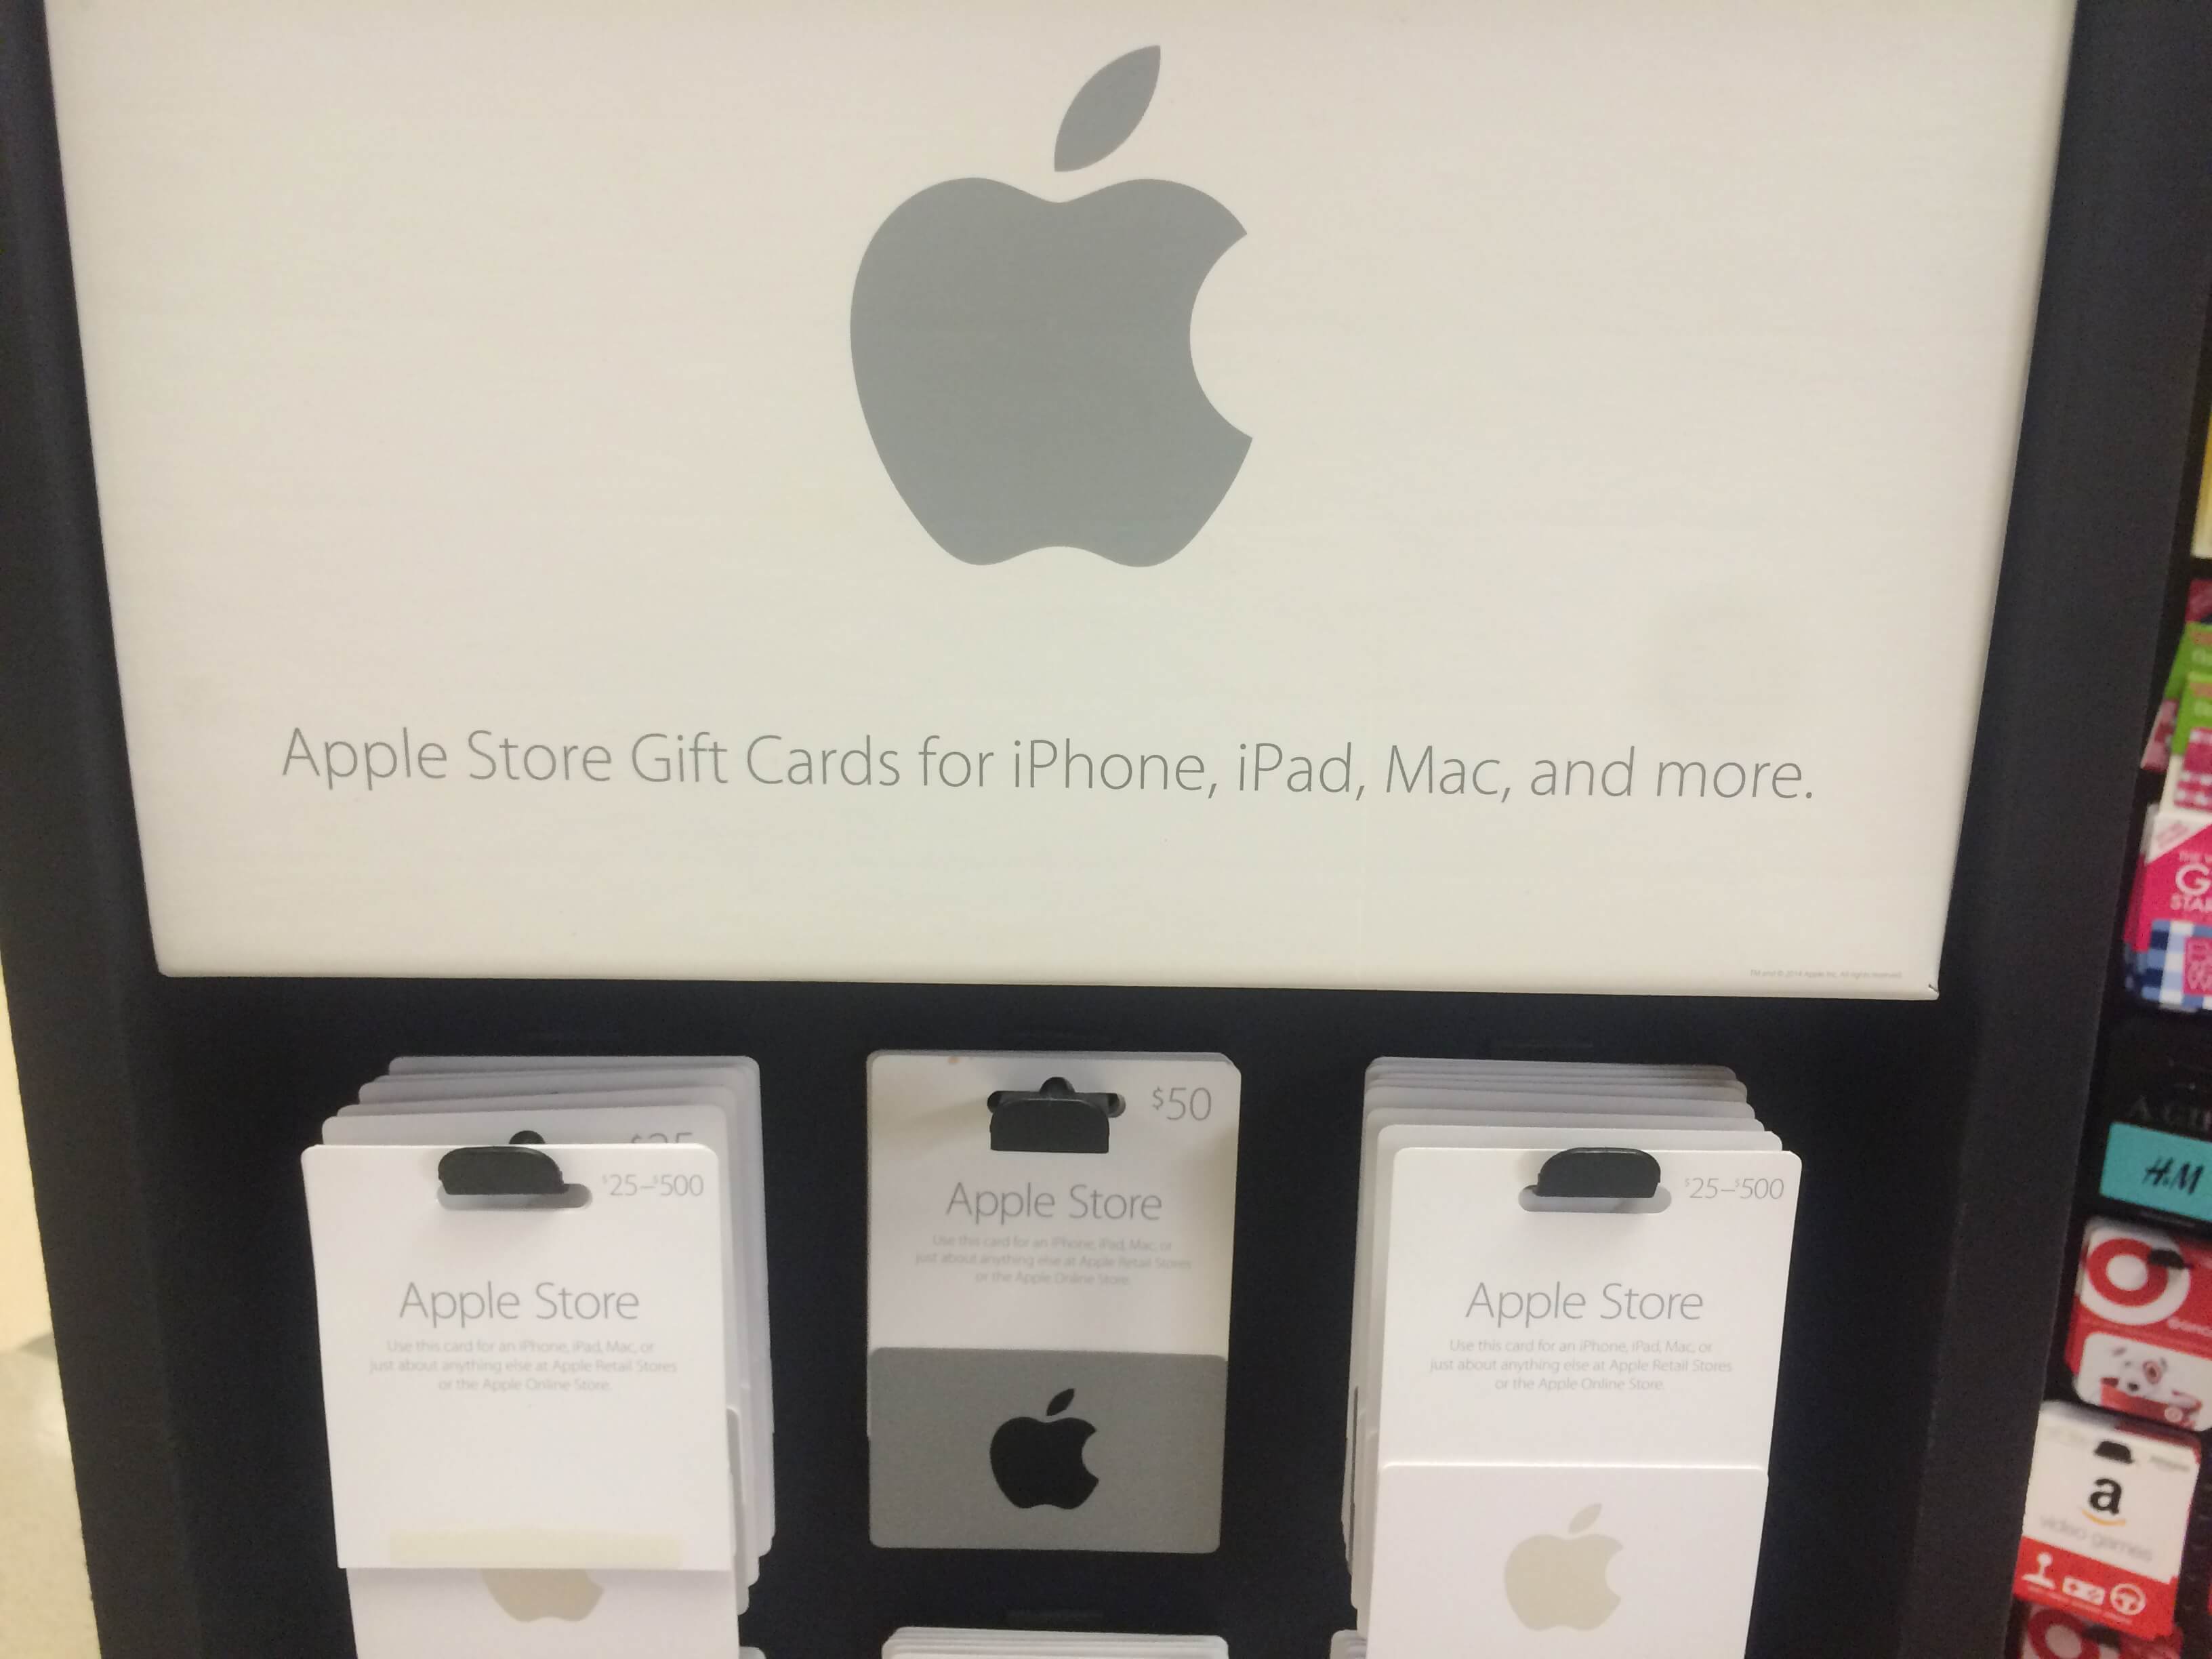 4x mr 点数)购买apple store gift cards,再用这些 gift cards 去苹果